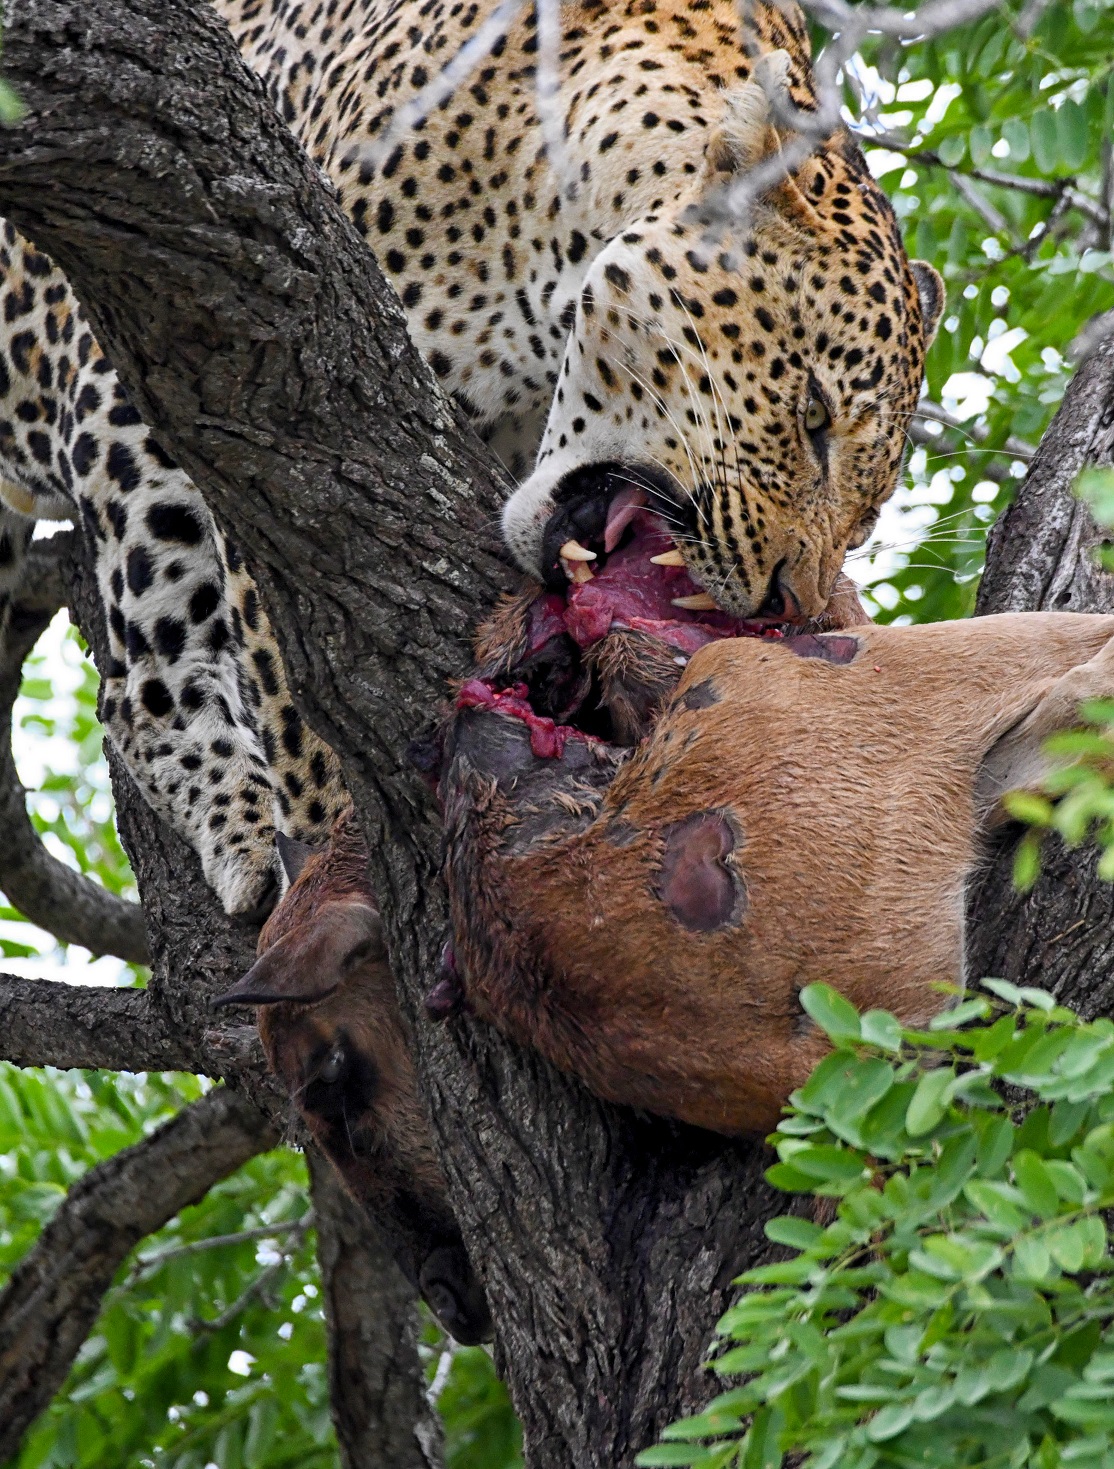 Dangerous safari animals are only dangerous if you threaten them!